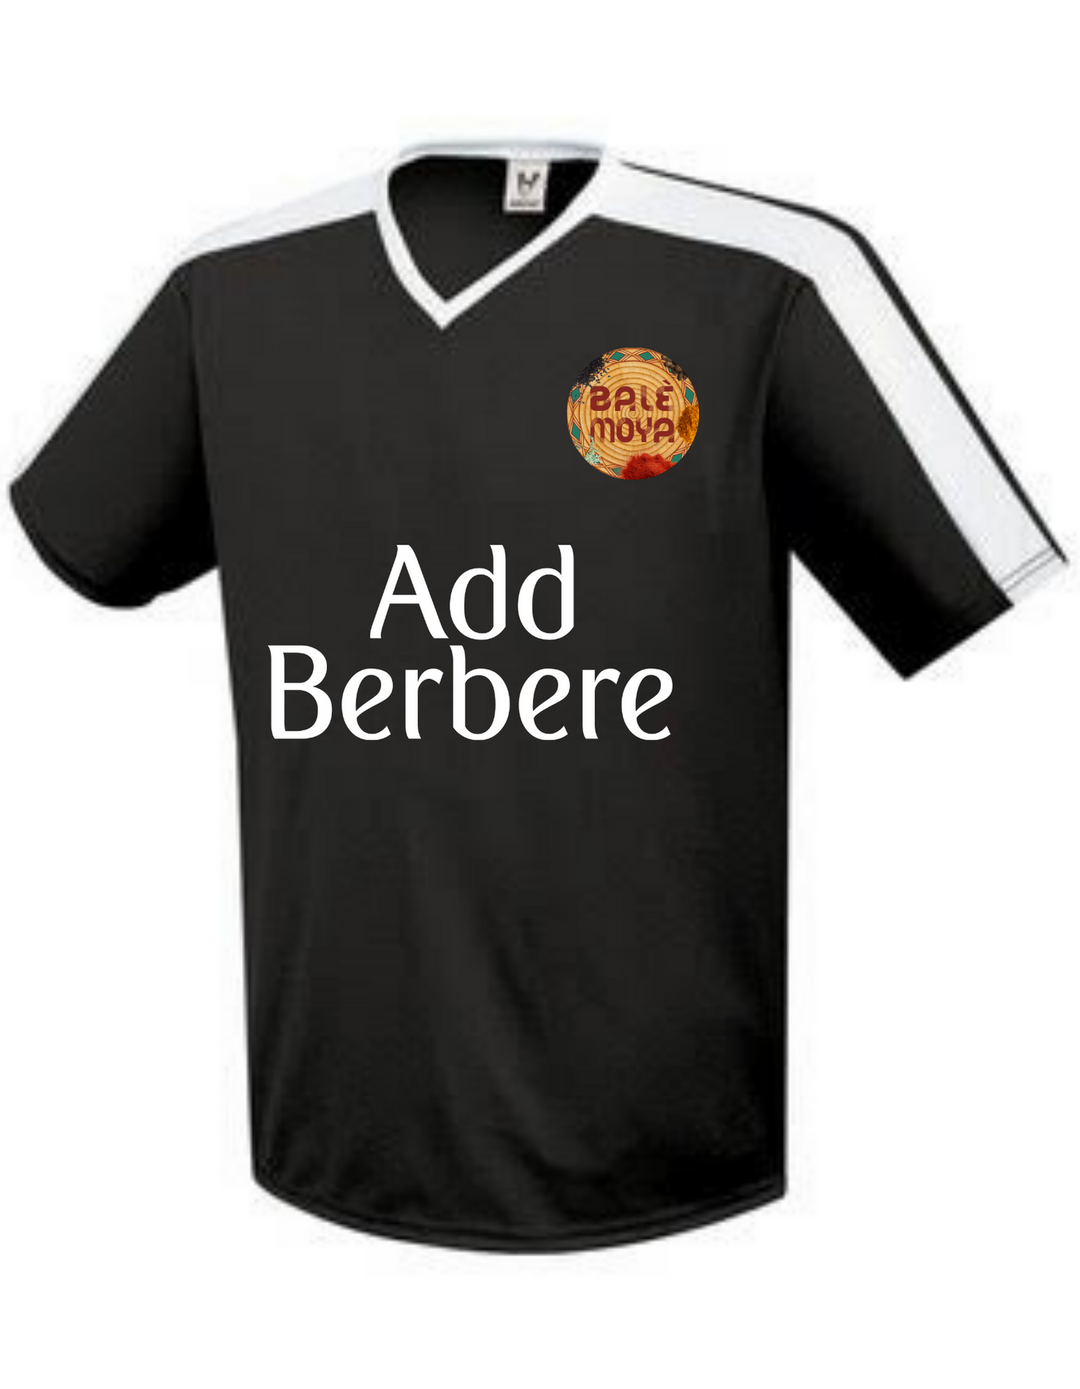 Team Berbere Soccer Jersey